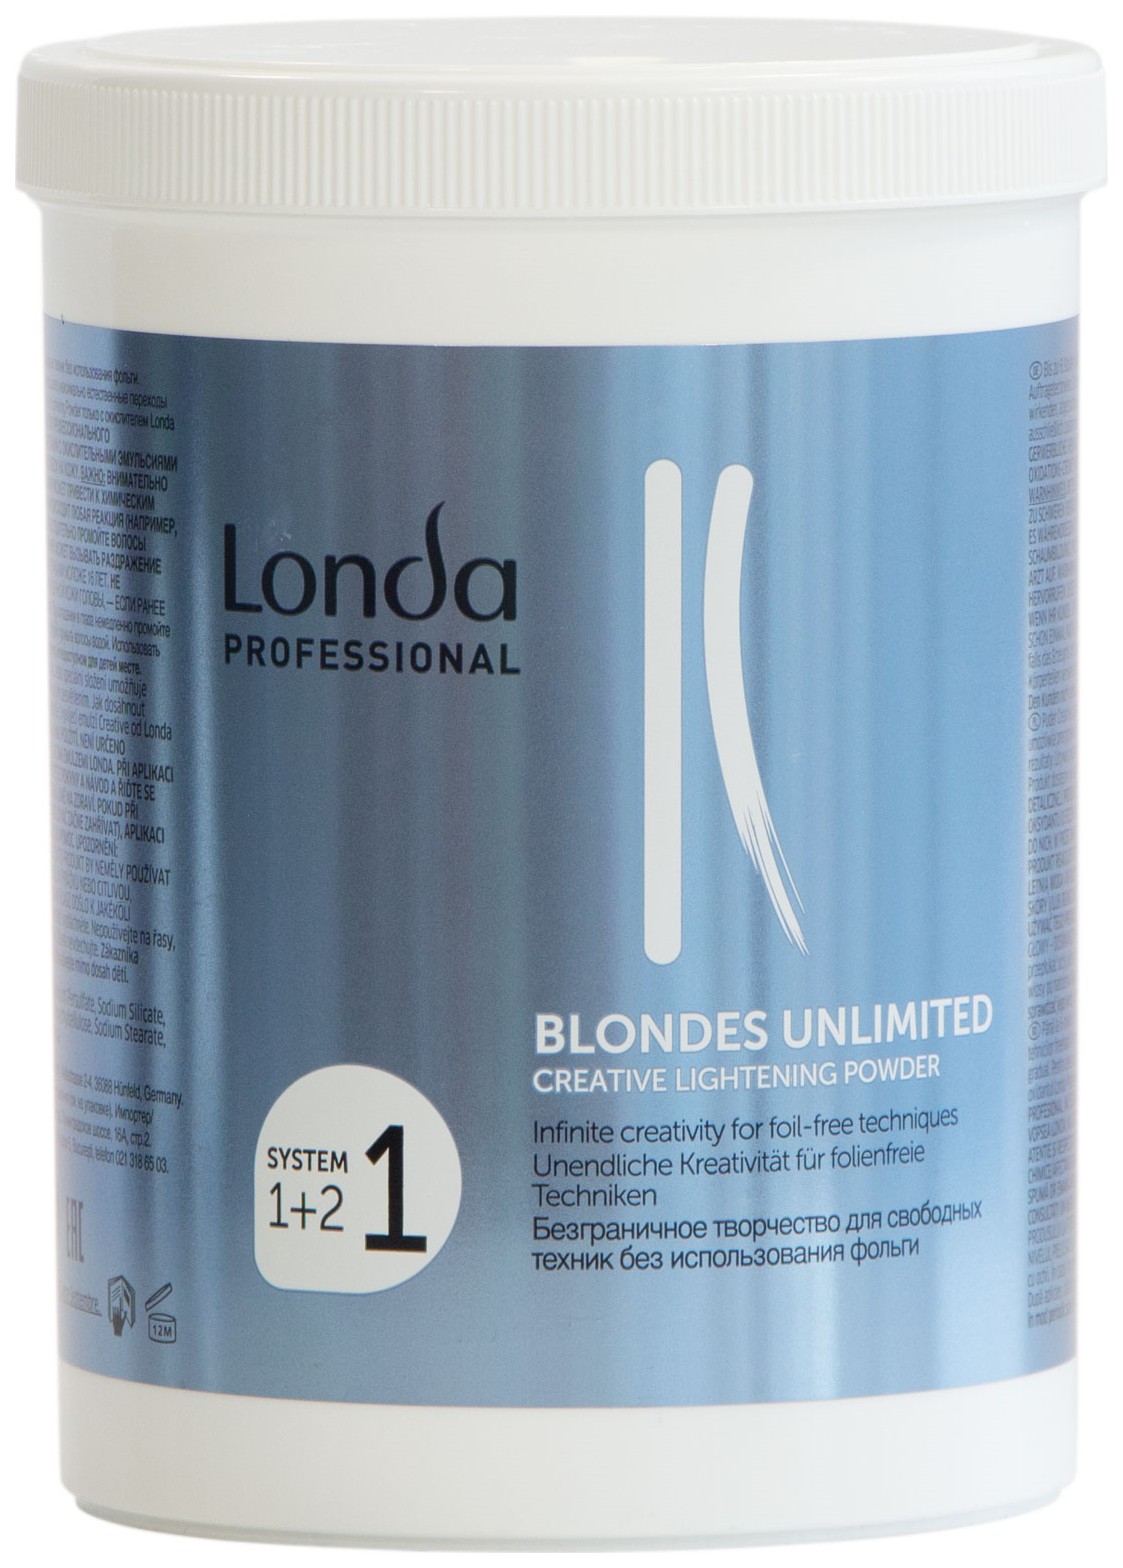 Осветлитель Londa Professional Blondes Unlimited Creative Lightening Powder 400 г осветляющая пудра с защитным комплексом plex bleach bleach 12 25 г